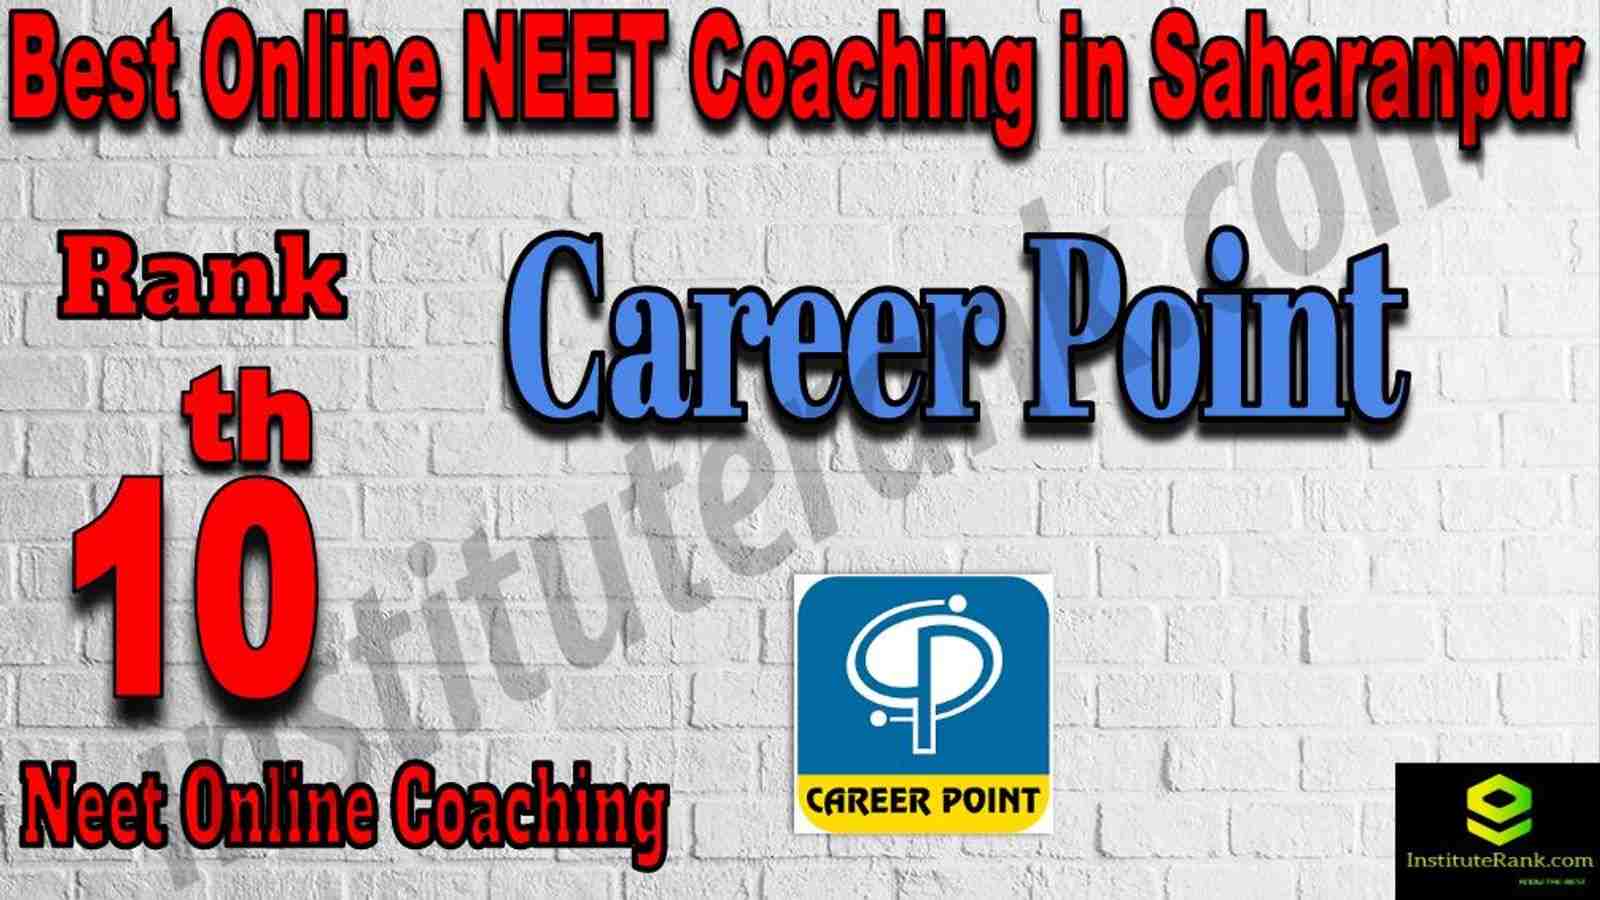 10th Best Online Neet Coaching in Saharanpur